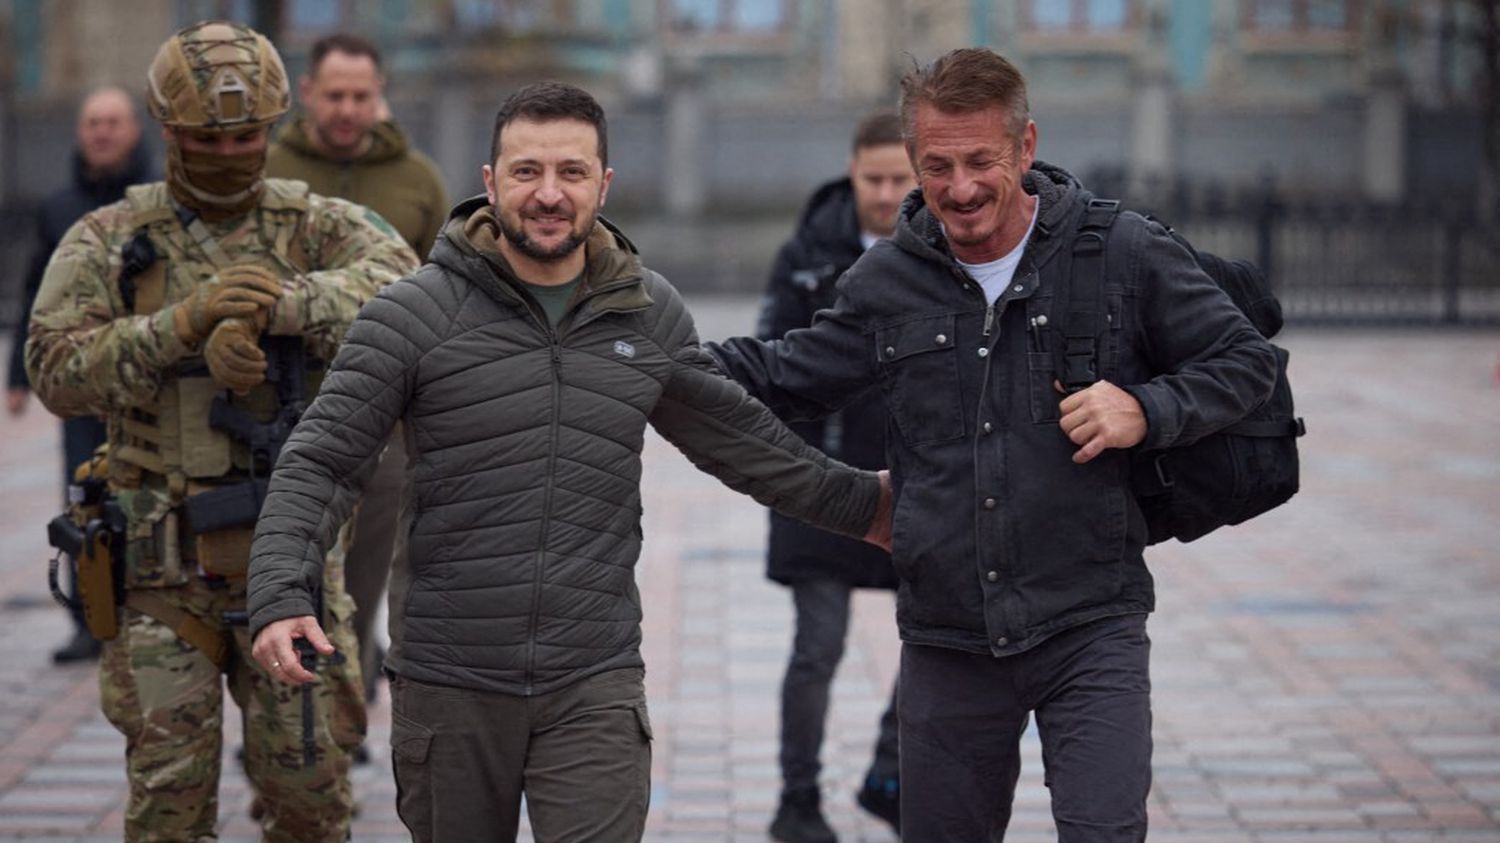 Sean Penn's documentary on Ukraine premieres at Berlinale
